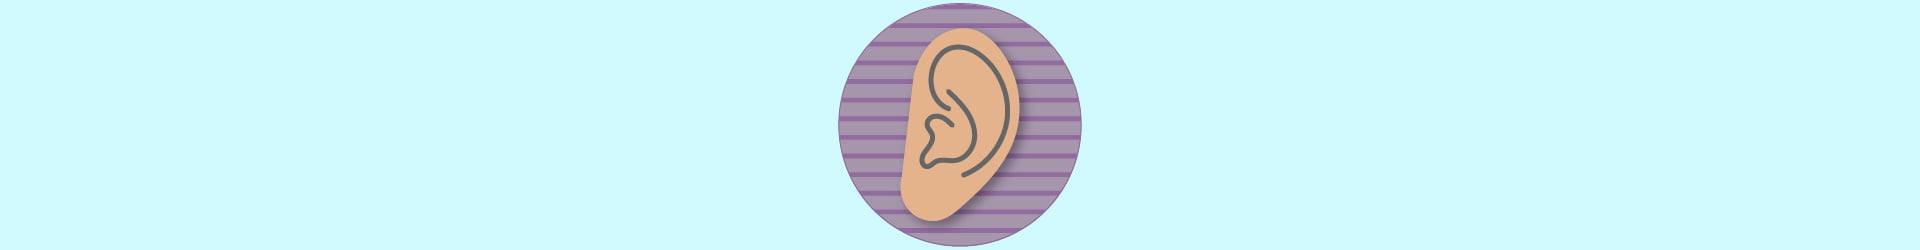 auditory-learning-style-blog